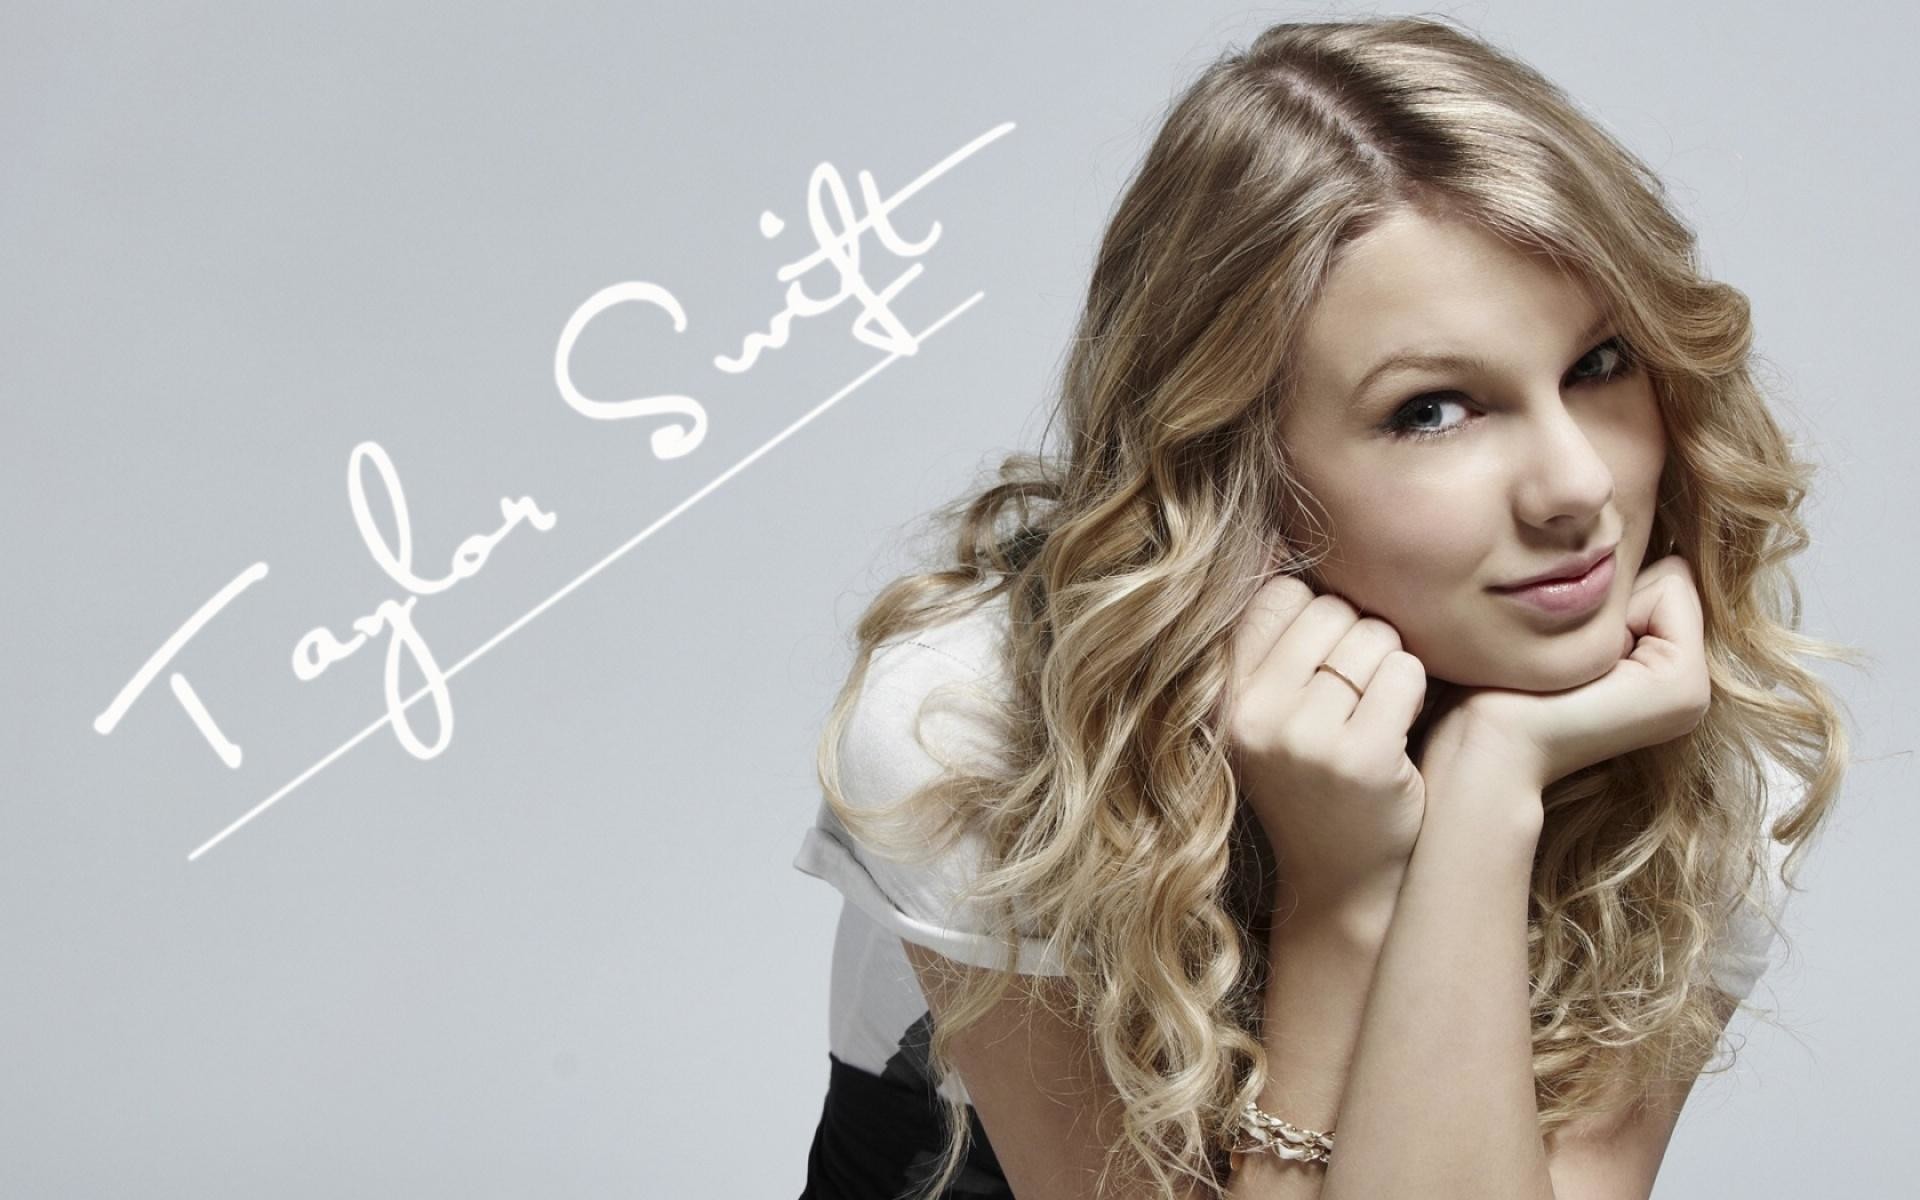 Taylor Swift HD Wallpaper Image